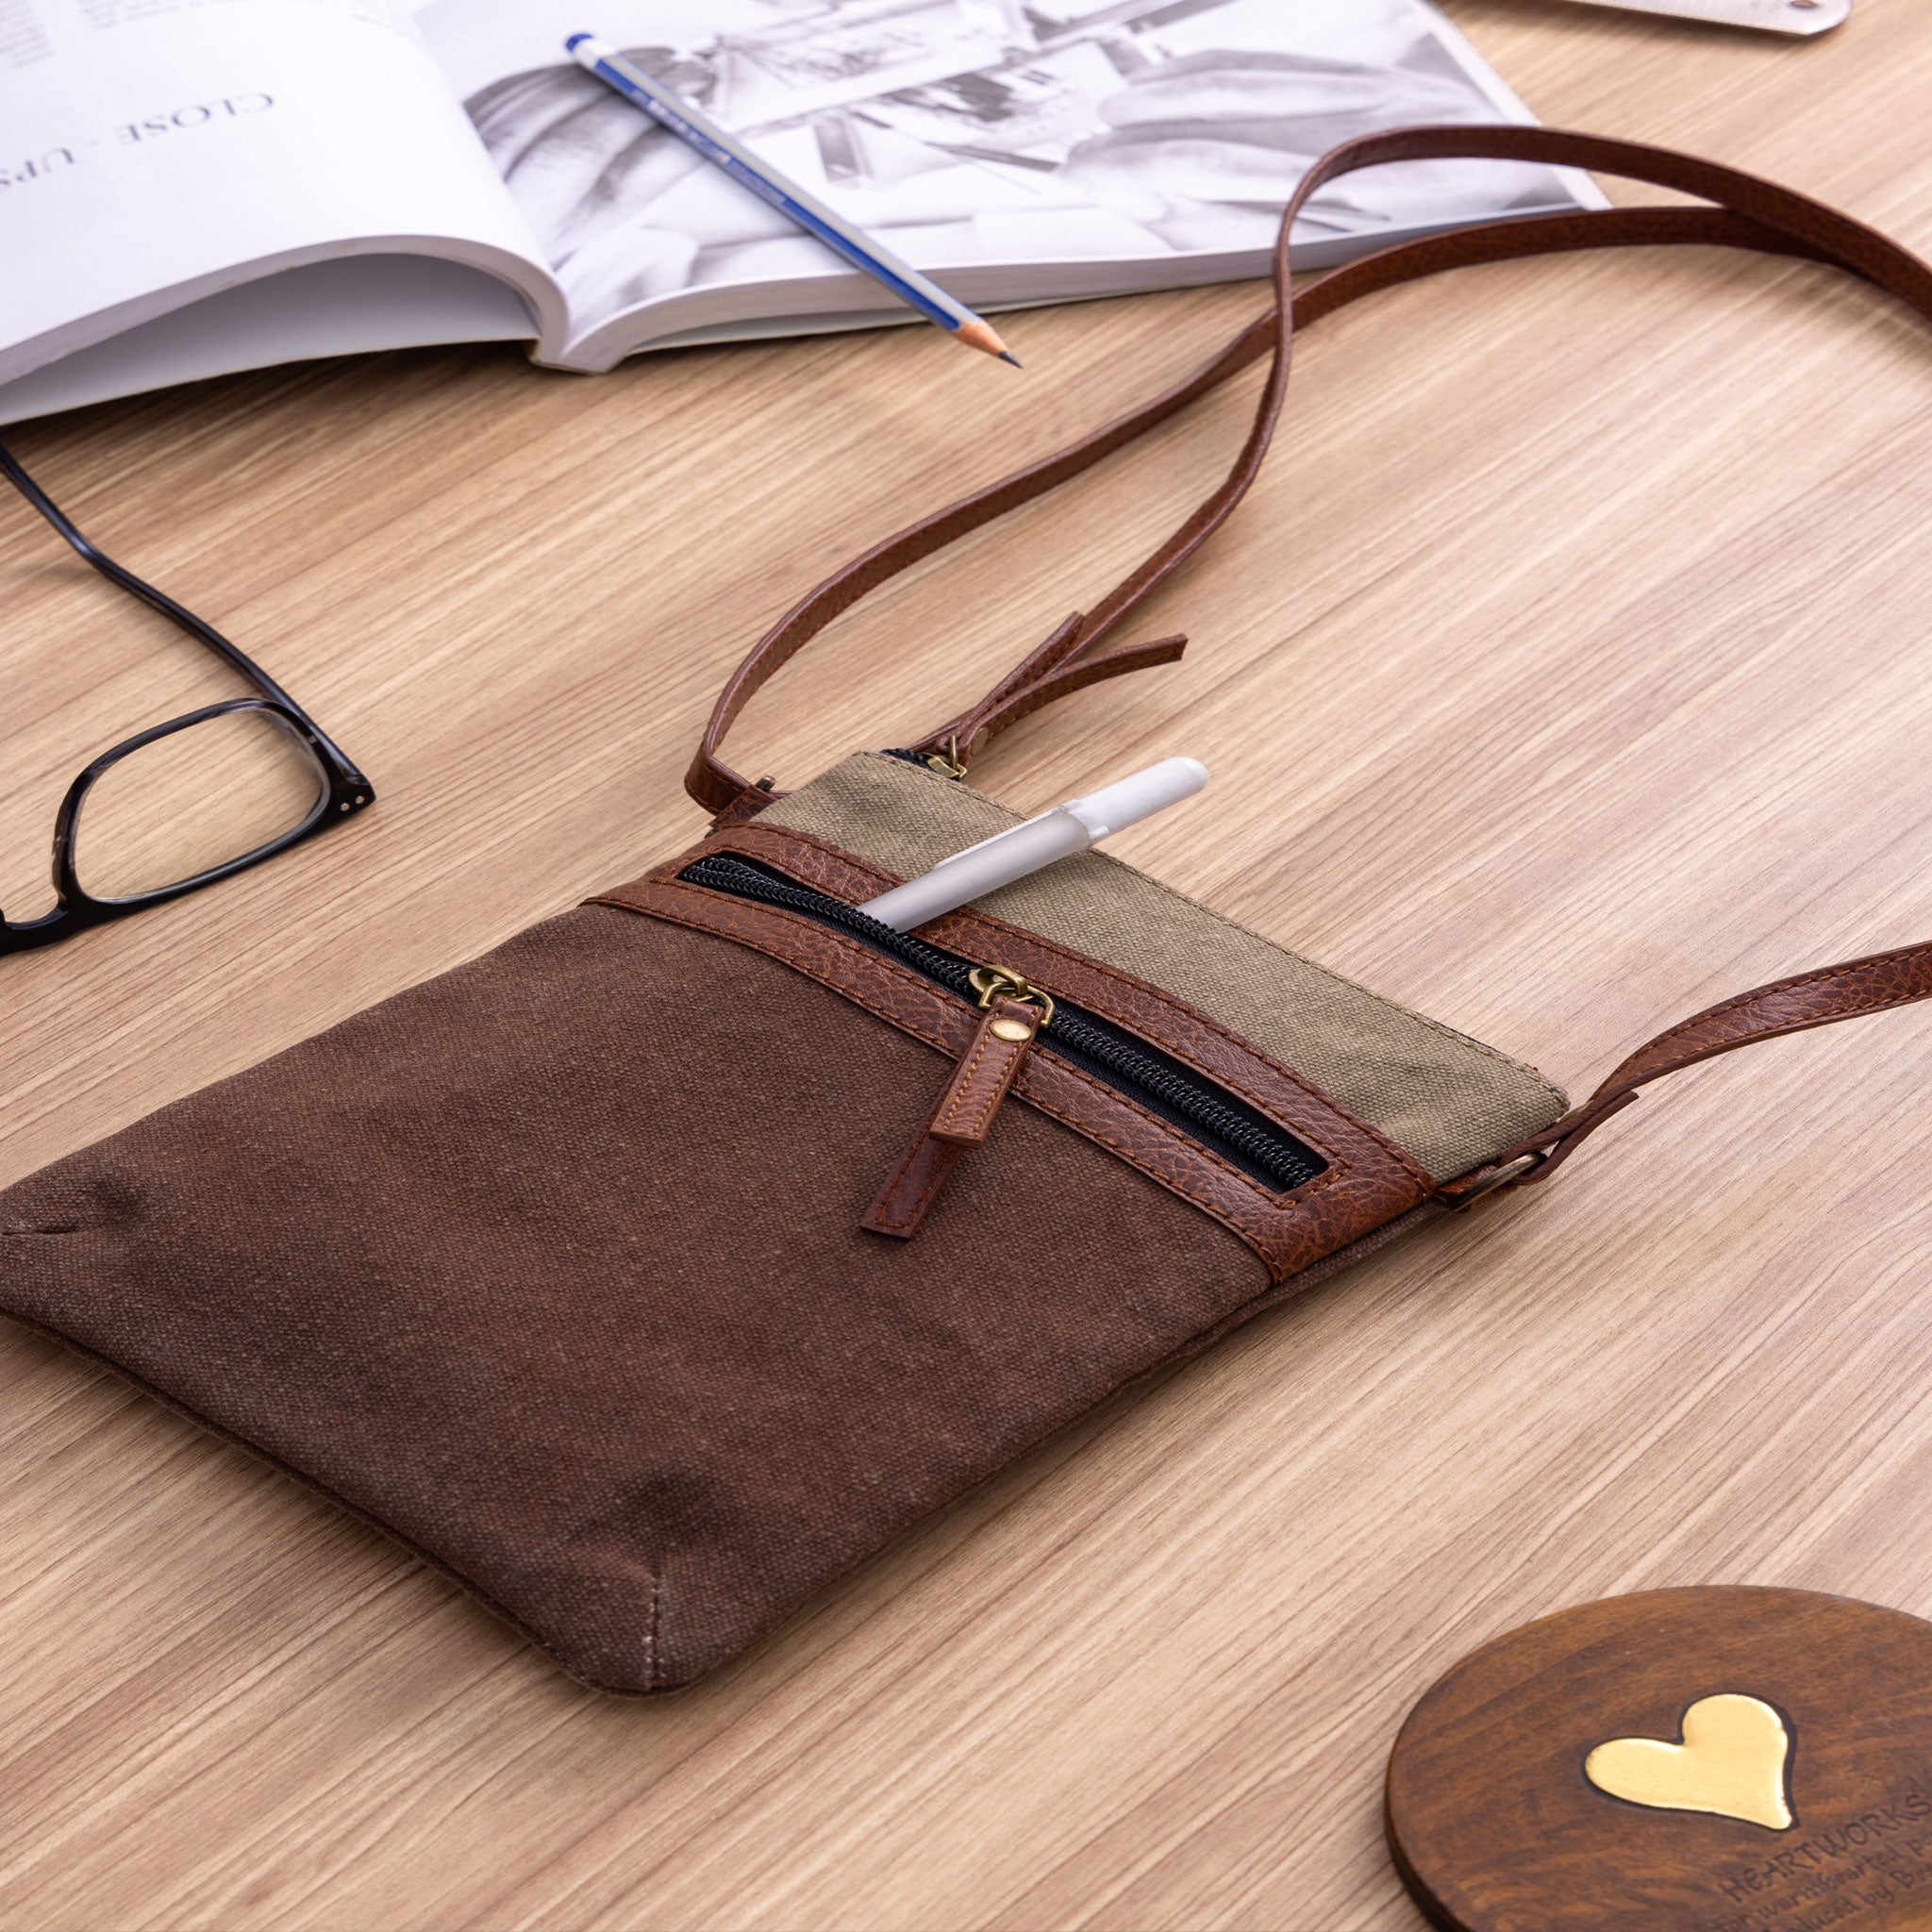 Mona B Small Messenger Crossbody Bag with Stylish Design for Girls and Women: Chocolate - (M-2515)